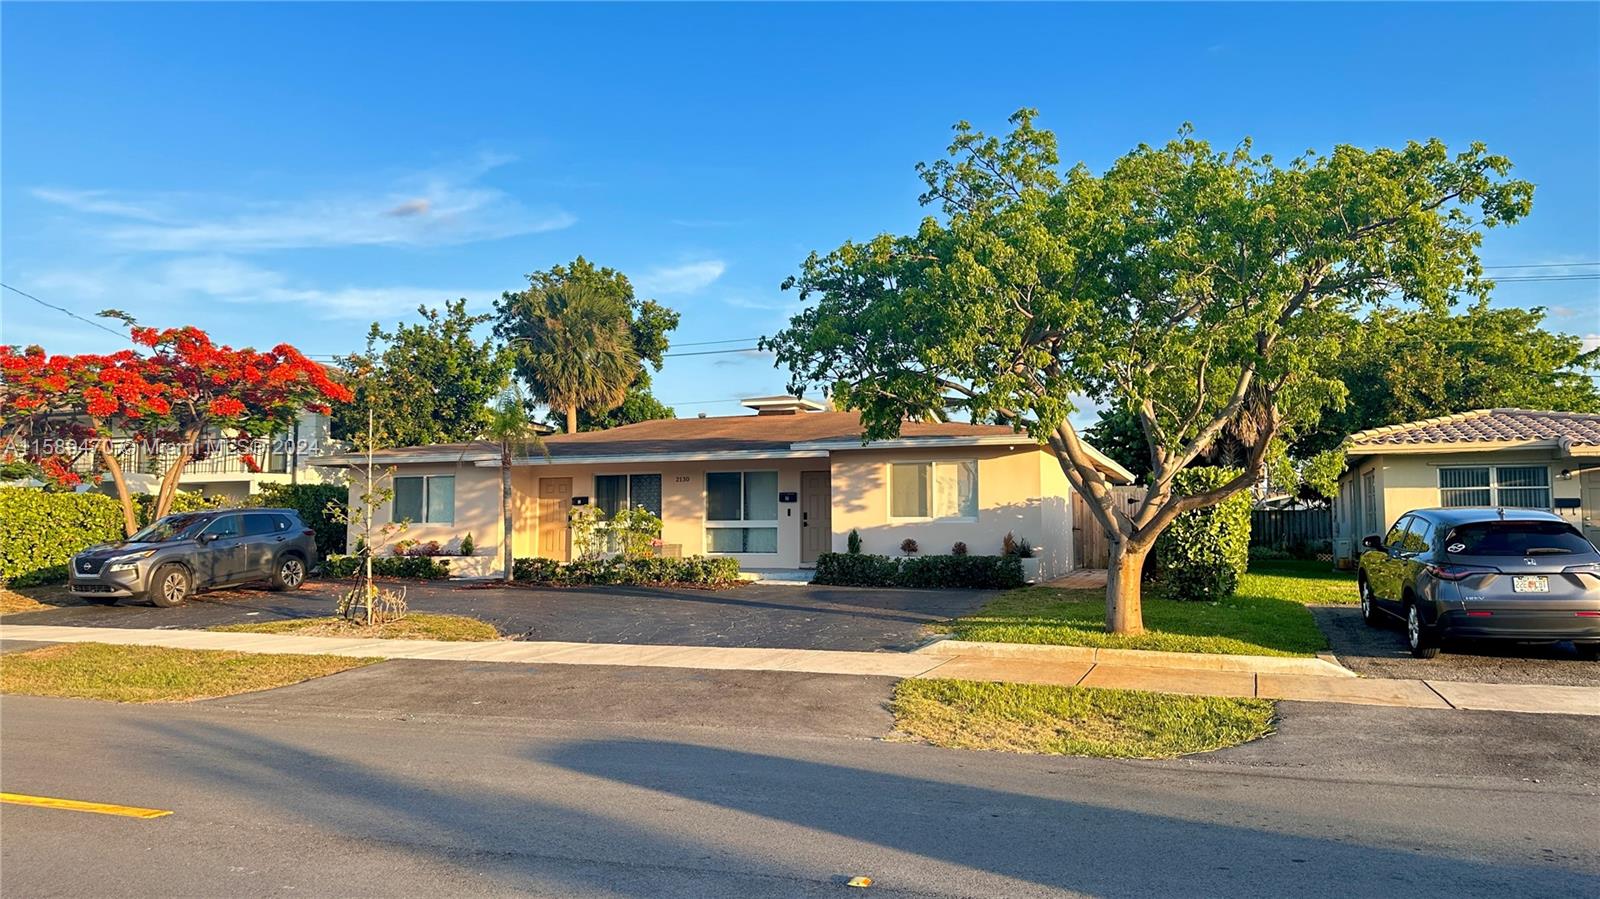 Rental Property at 2130 Ne 56th St, Fort Lauderdale, Broward County, Florida -  - $1,250,000 MO.